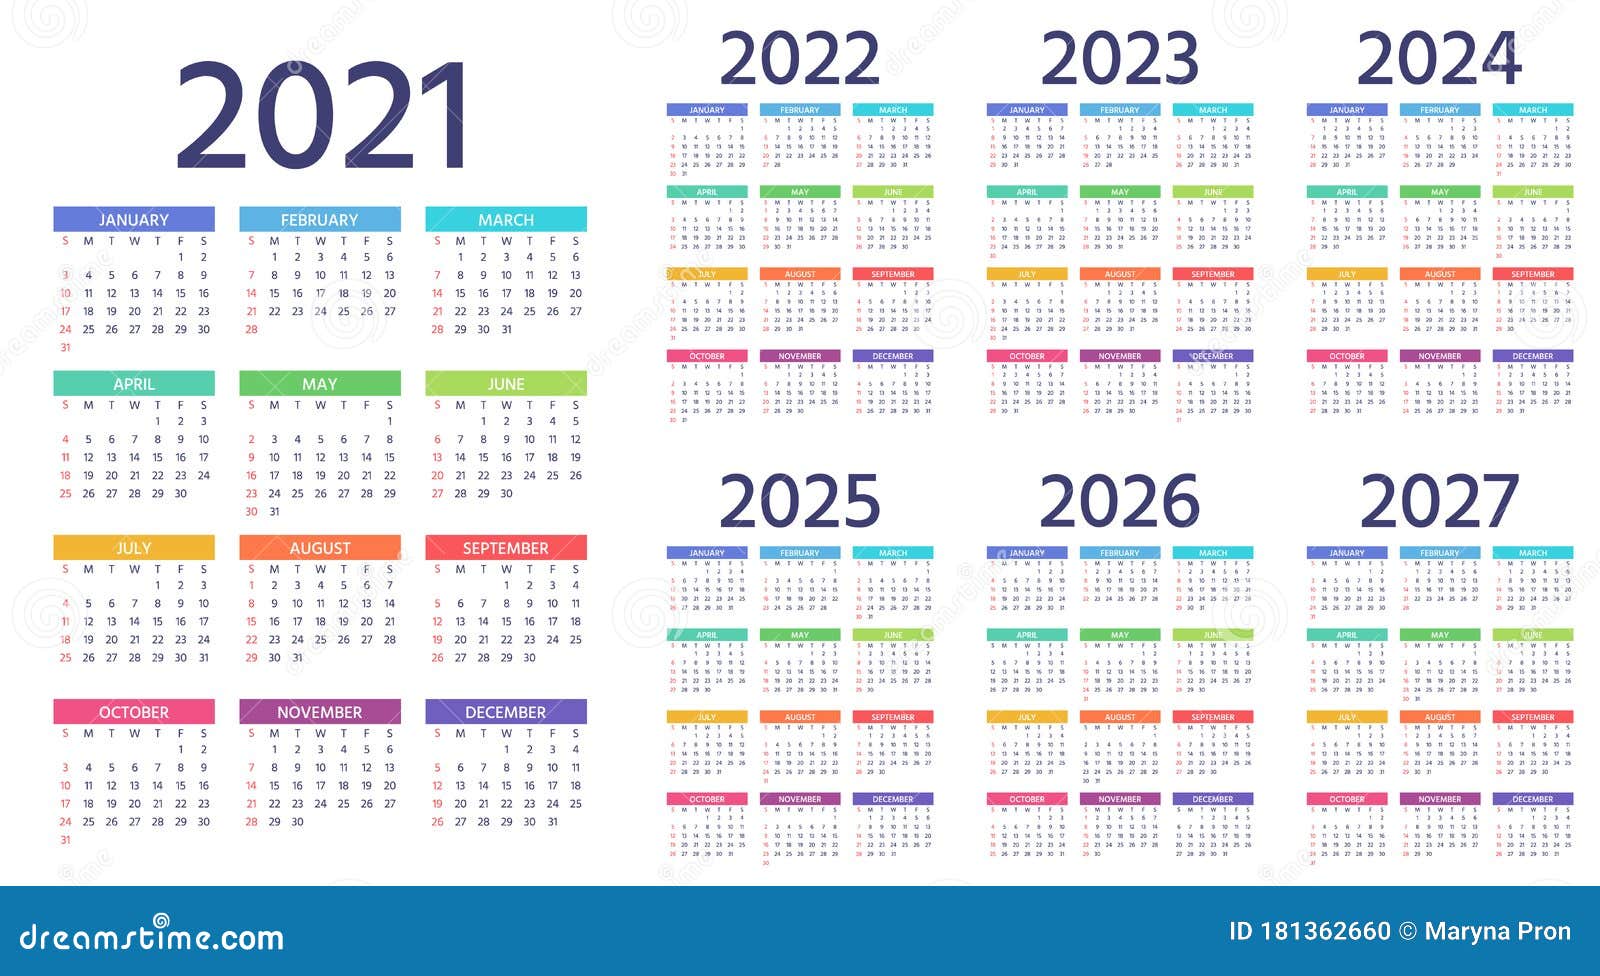 2026 по месяцам. Календарь 2022 2023 2024 2025. Календарь 2021-2022. Календарь 2021-2025. Календарь 2022-2023 год.